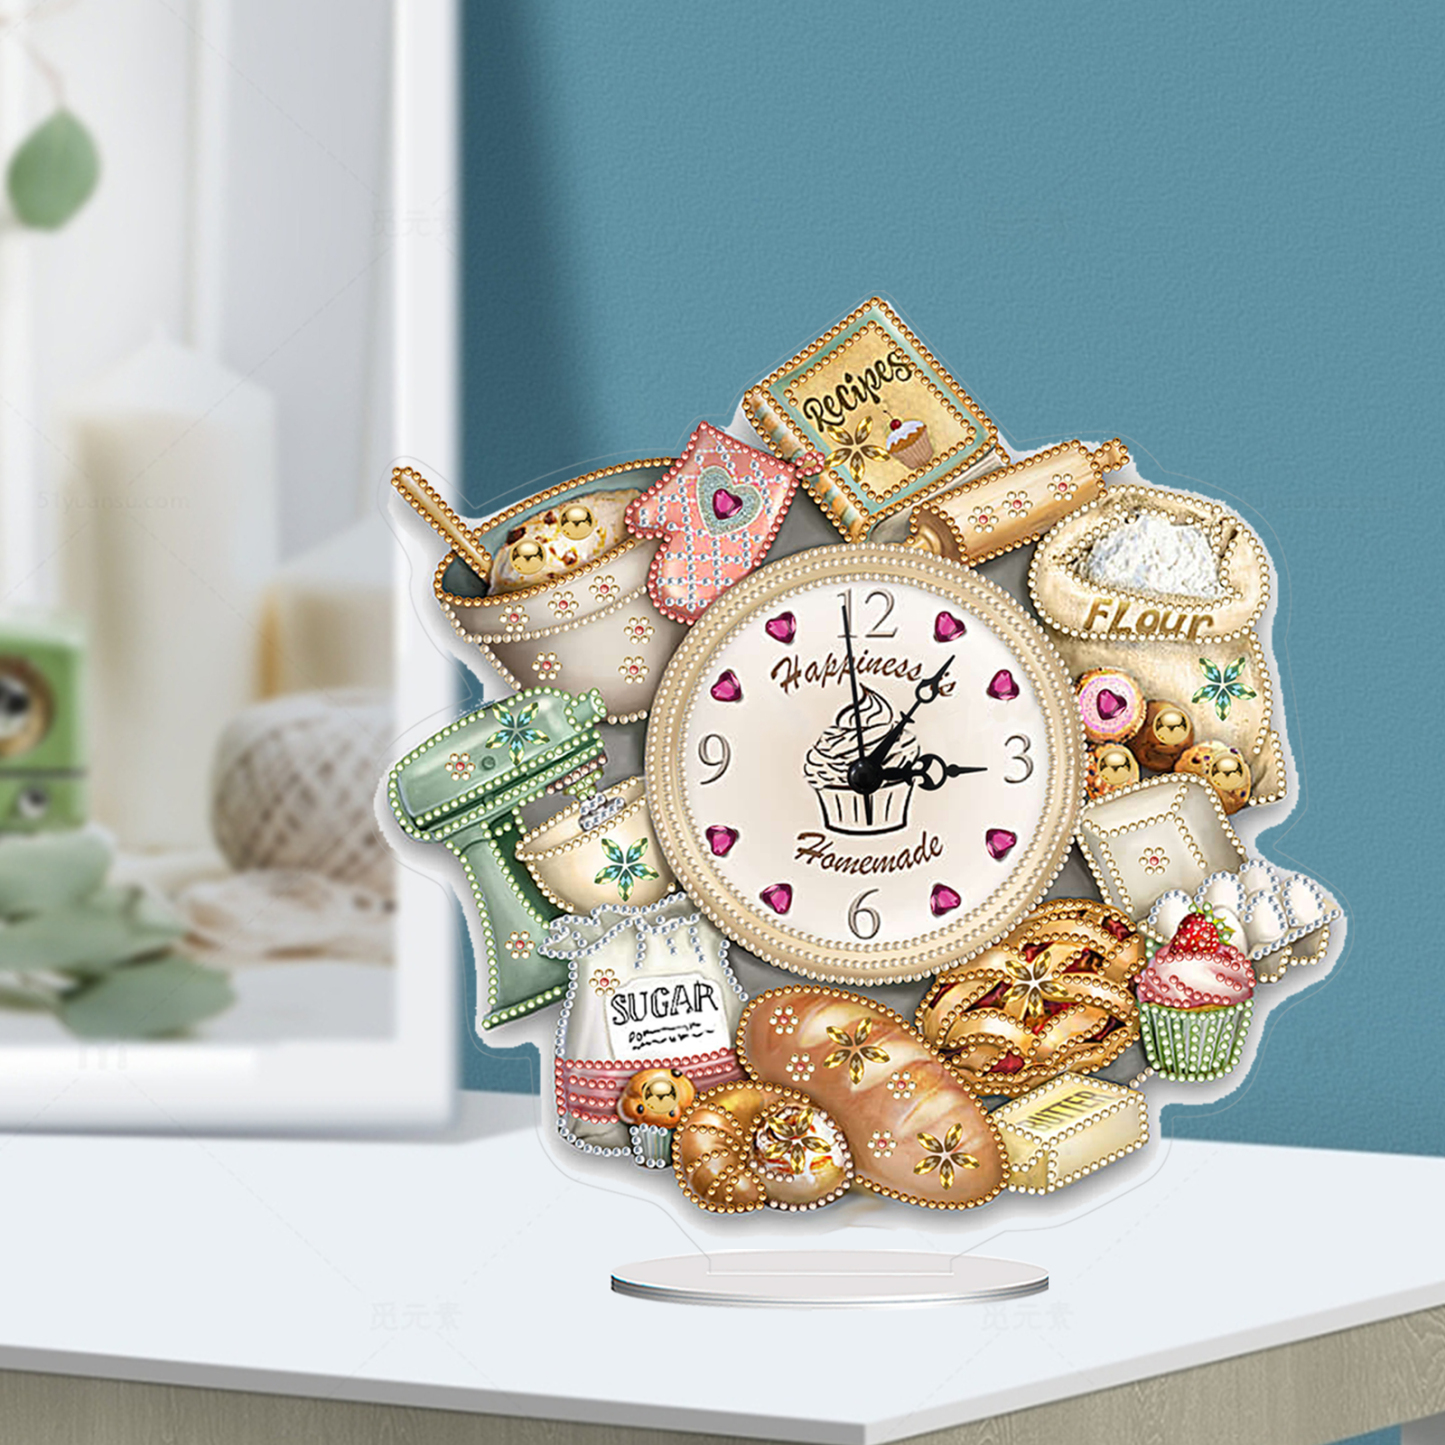 5D DIY Special Shape Diamond Painting Desk Ornament Handmade Clock Kit(Bake Time)